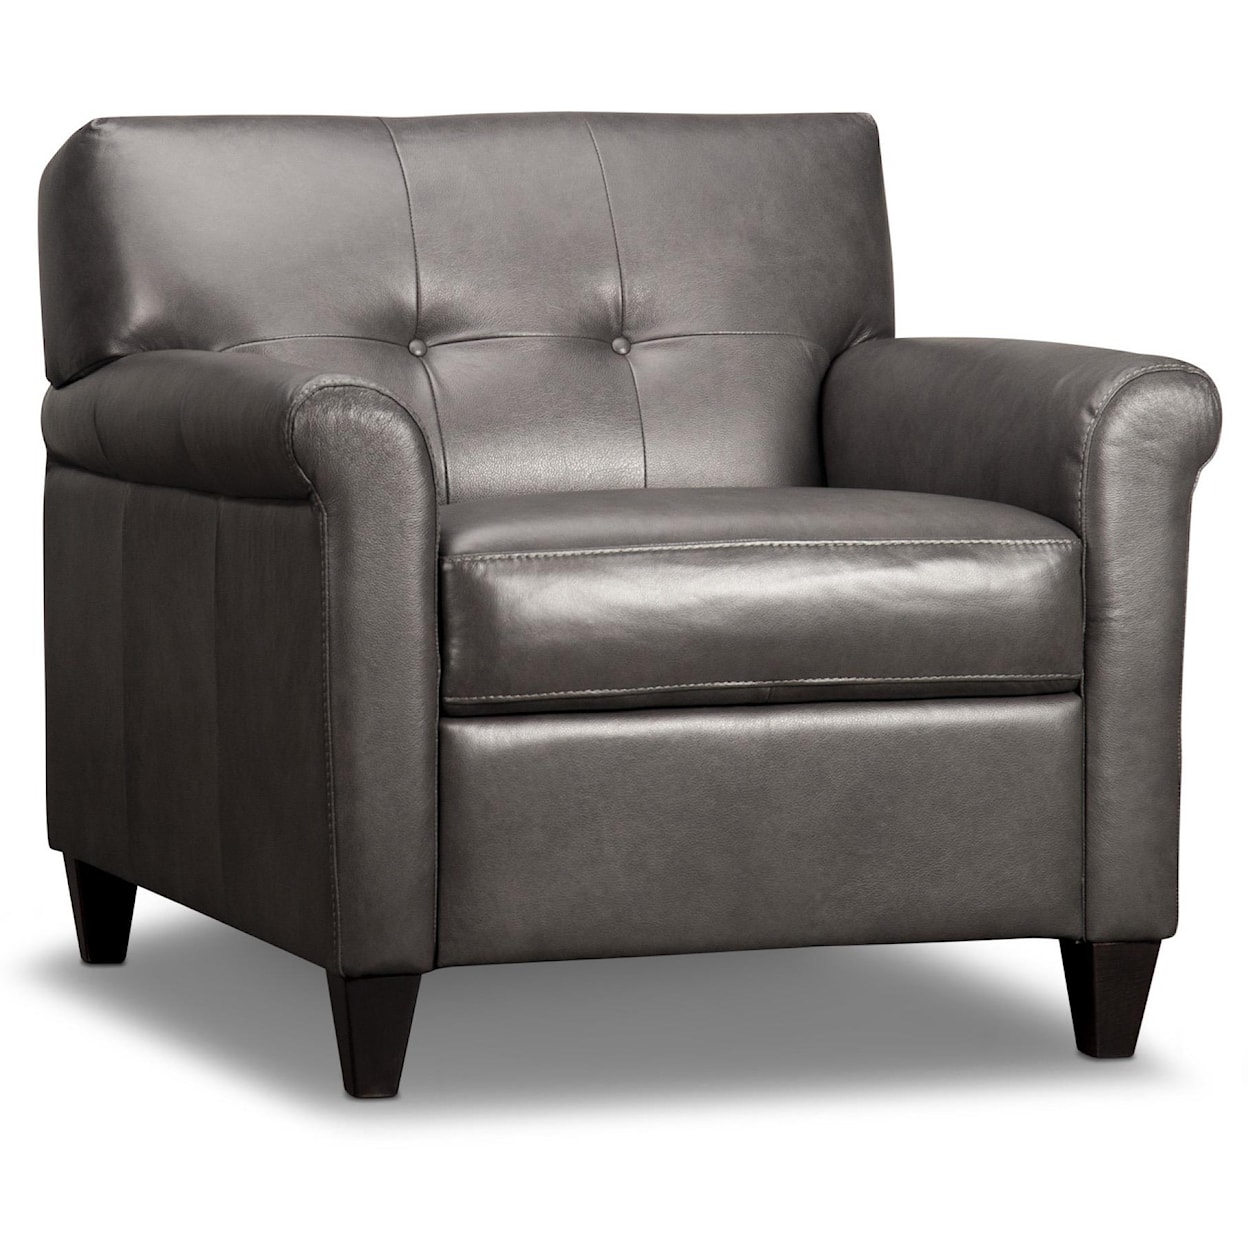 Digio Leather Sofas Berto Berto Leather Arm Chair